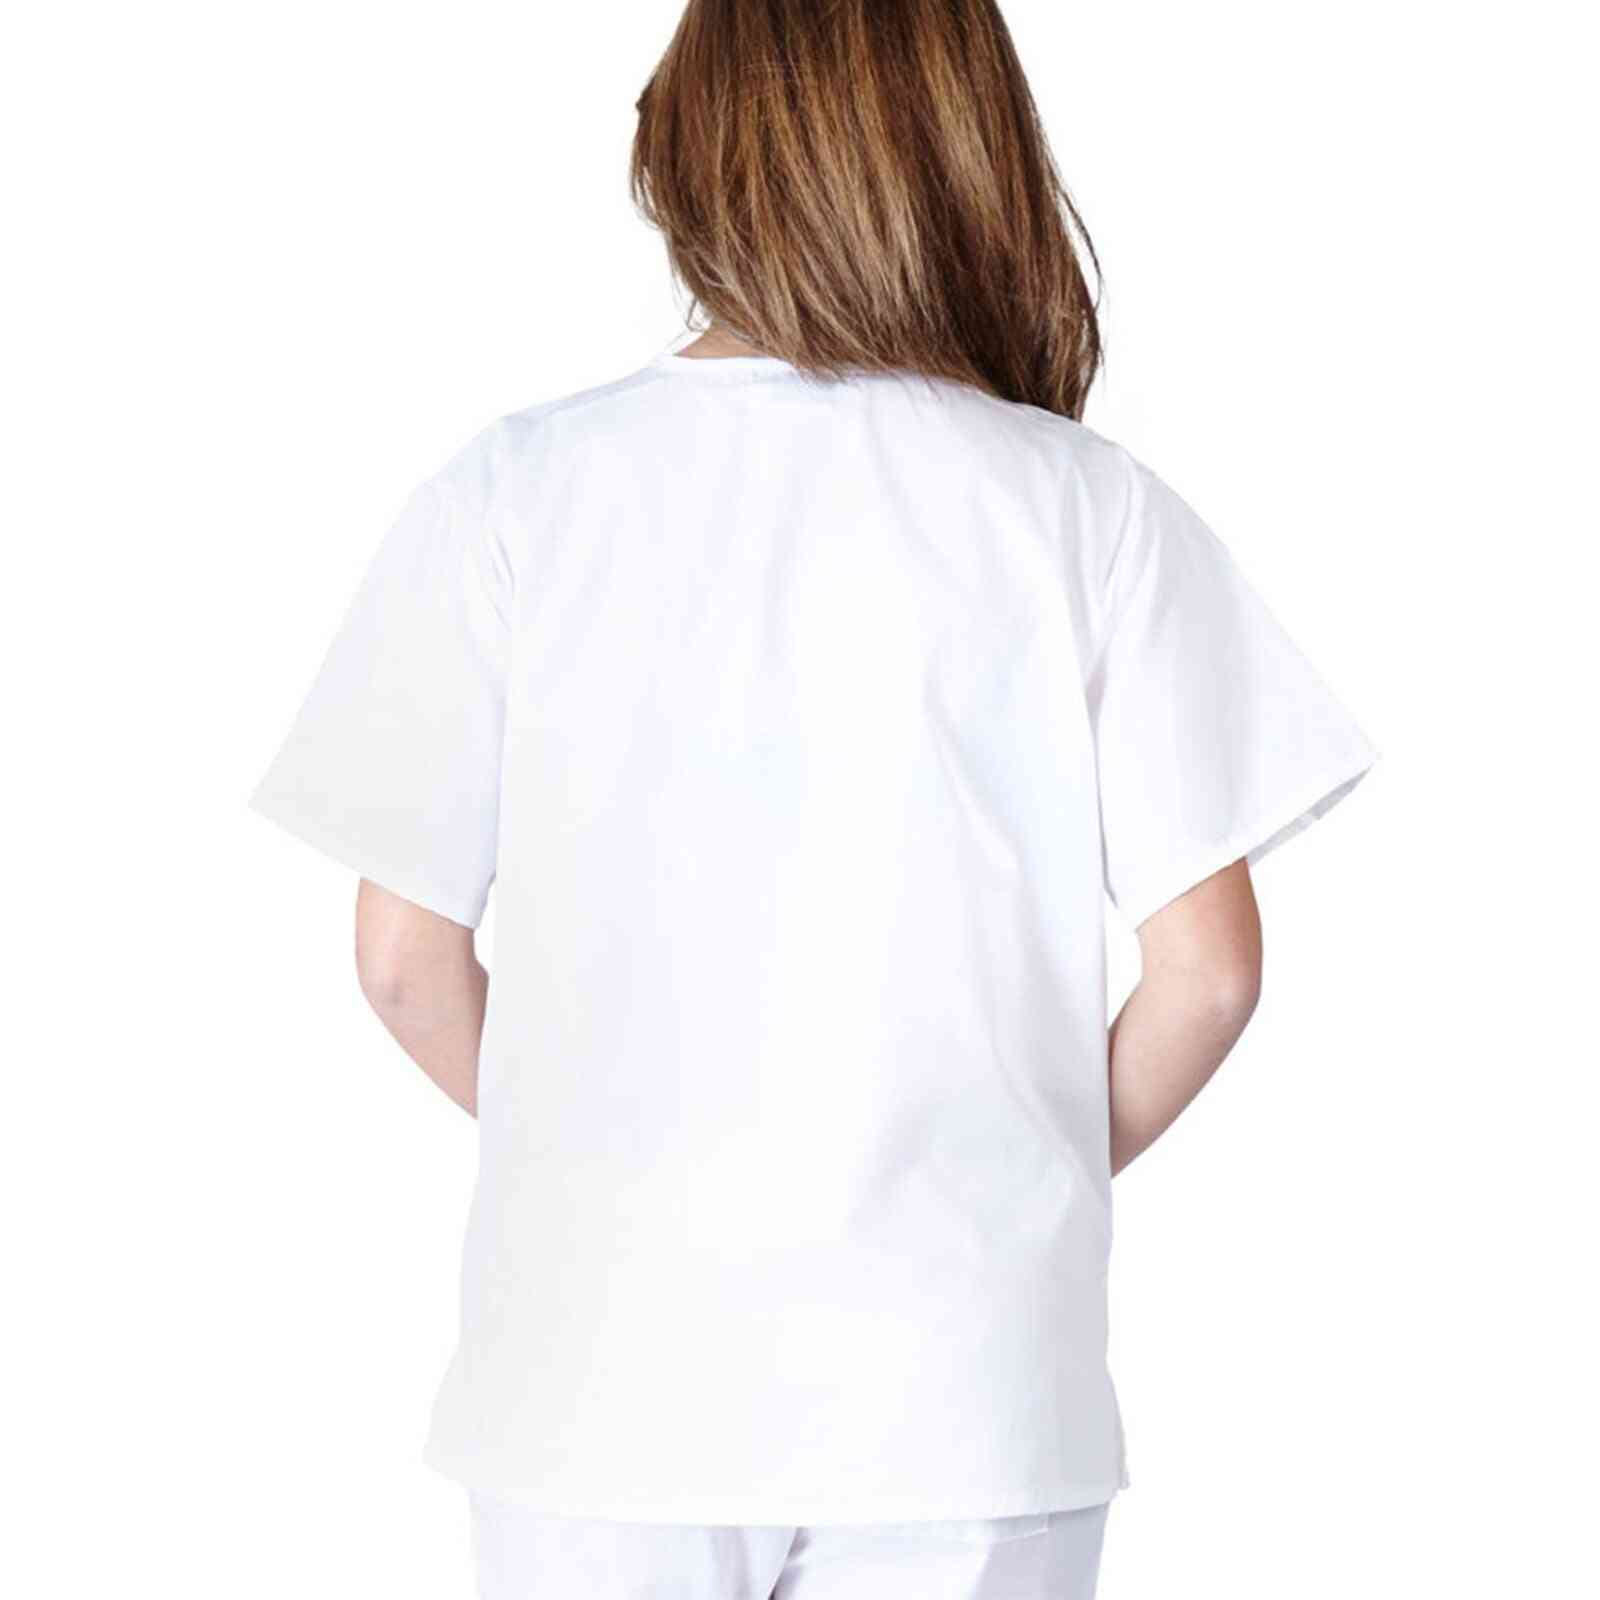 Women Shirts Tops Short Sleeve V-neck Tops Nursing Working Uniform